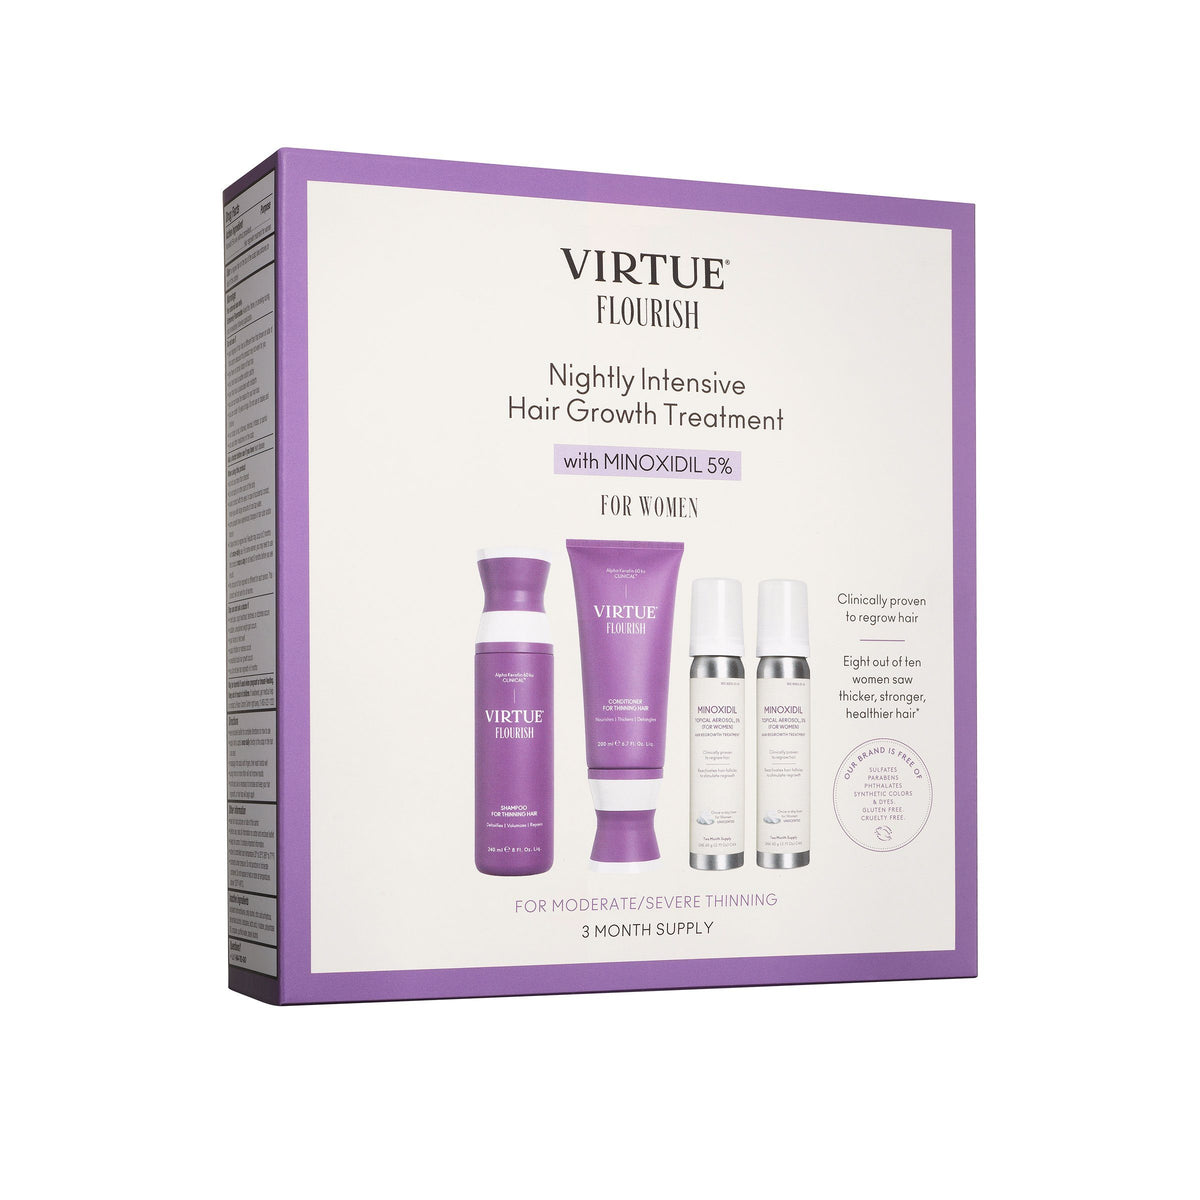 Virtue® Flourish Hair Growth Treatment with Minxodil | Shop at milk + honey